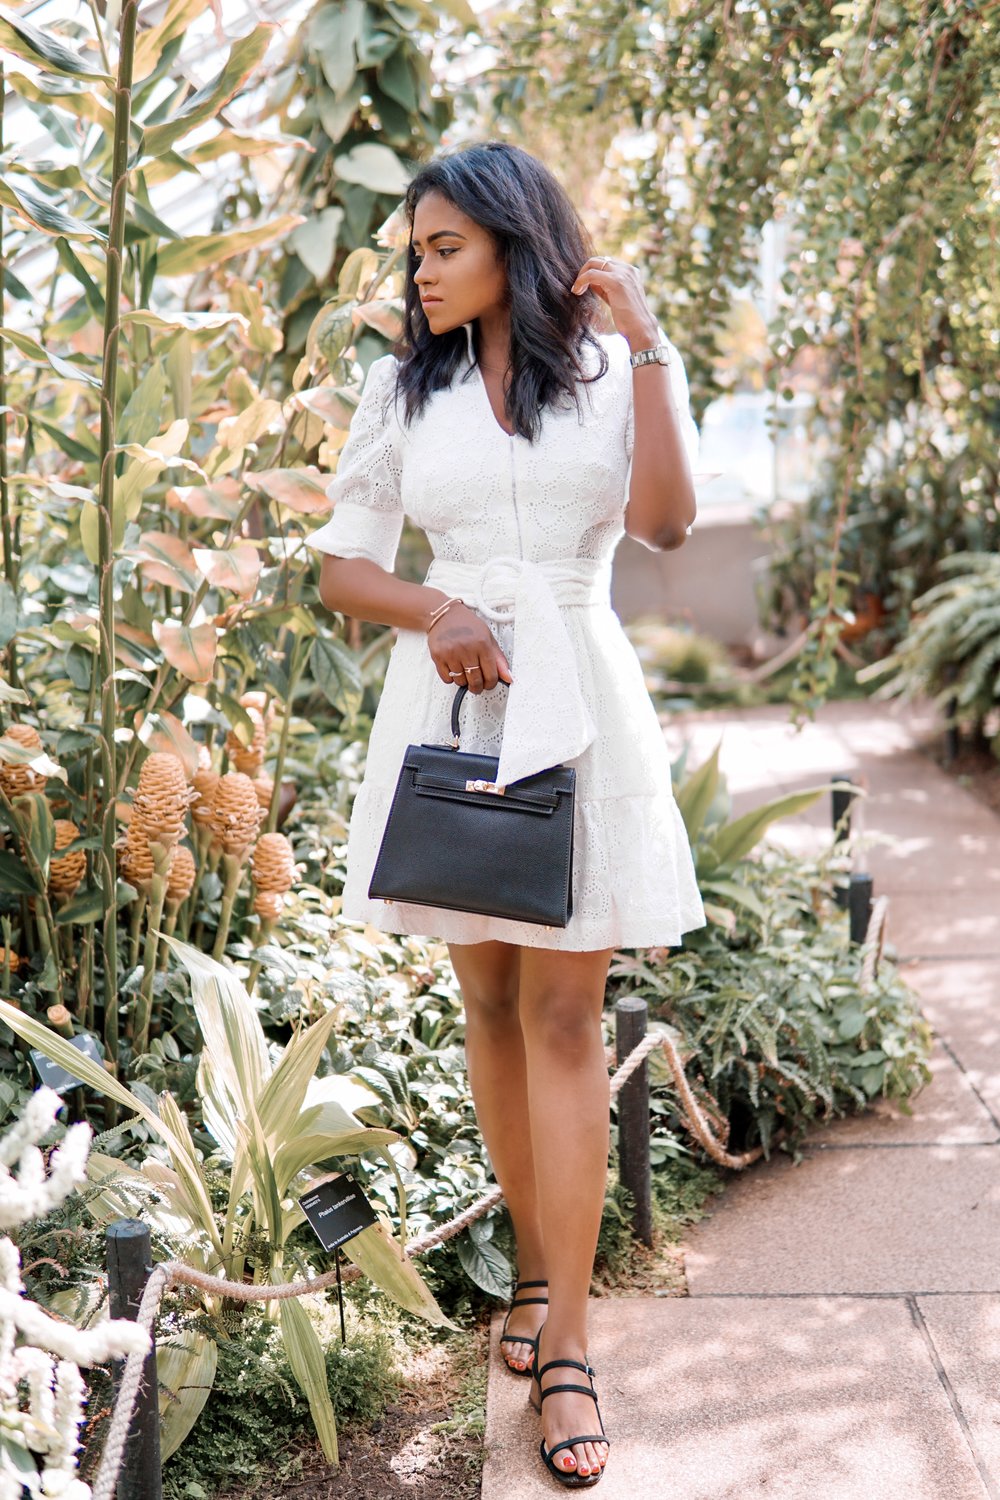 Sachini wearing a white dress holding a black Hermès Kelly bag walking in a botanic garden